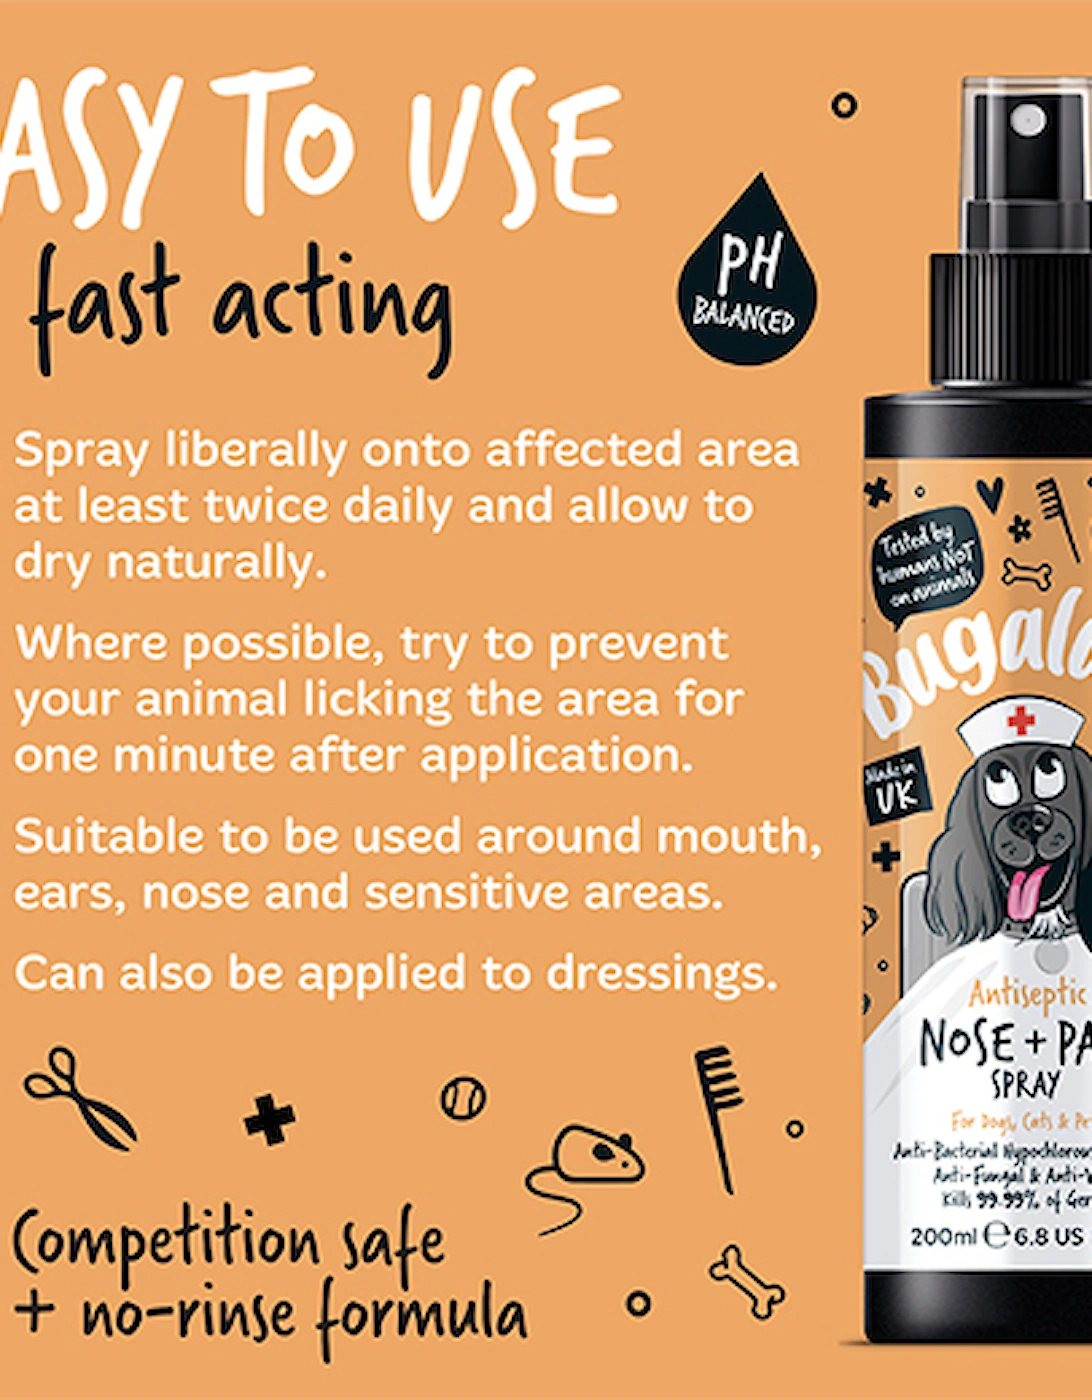 Antiseptic Nose & Paw Spray 200ml